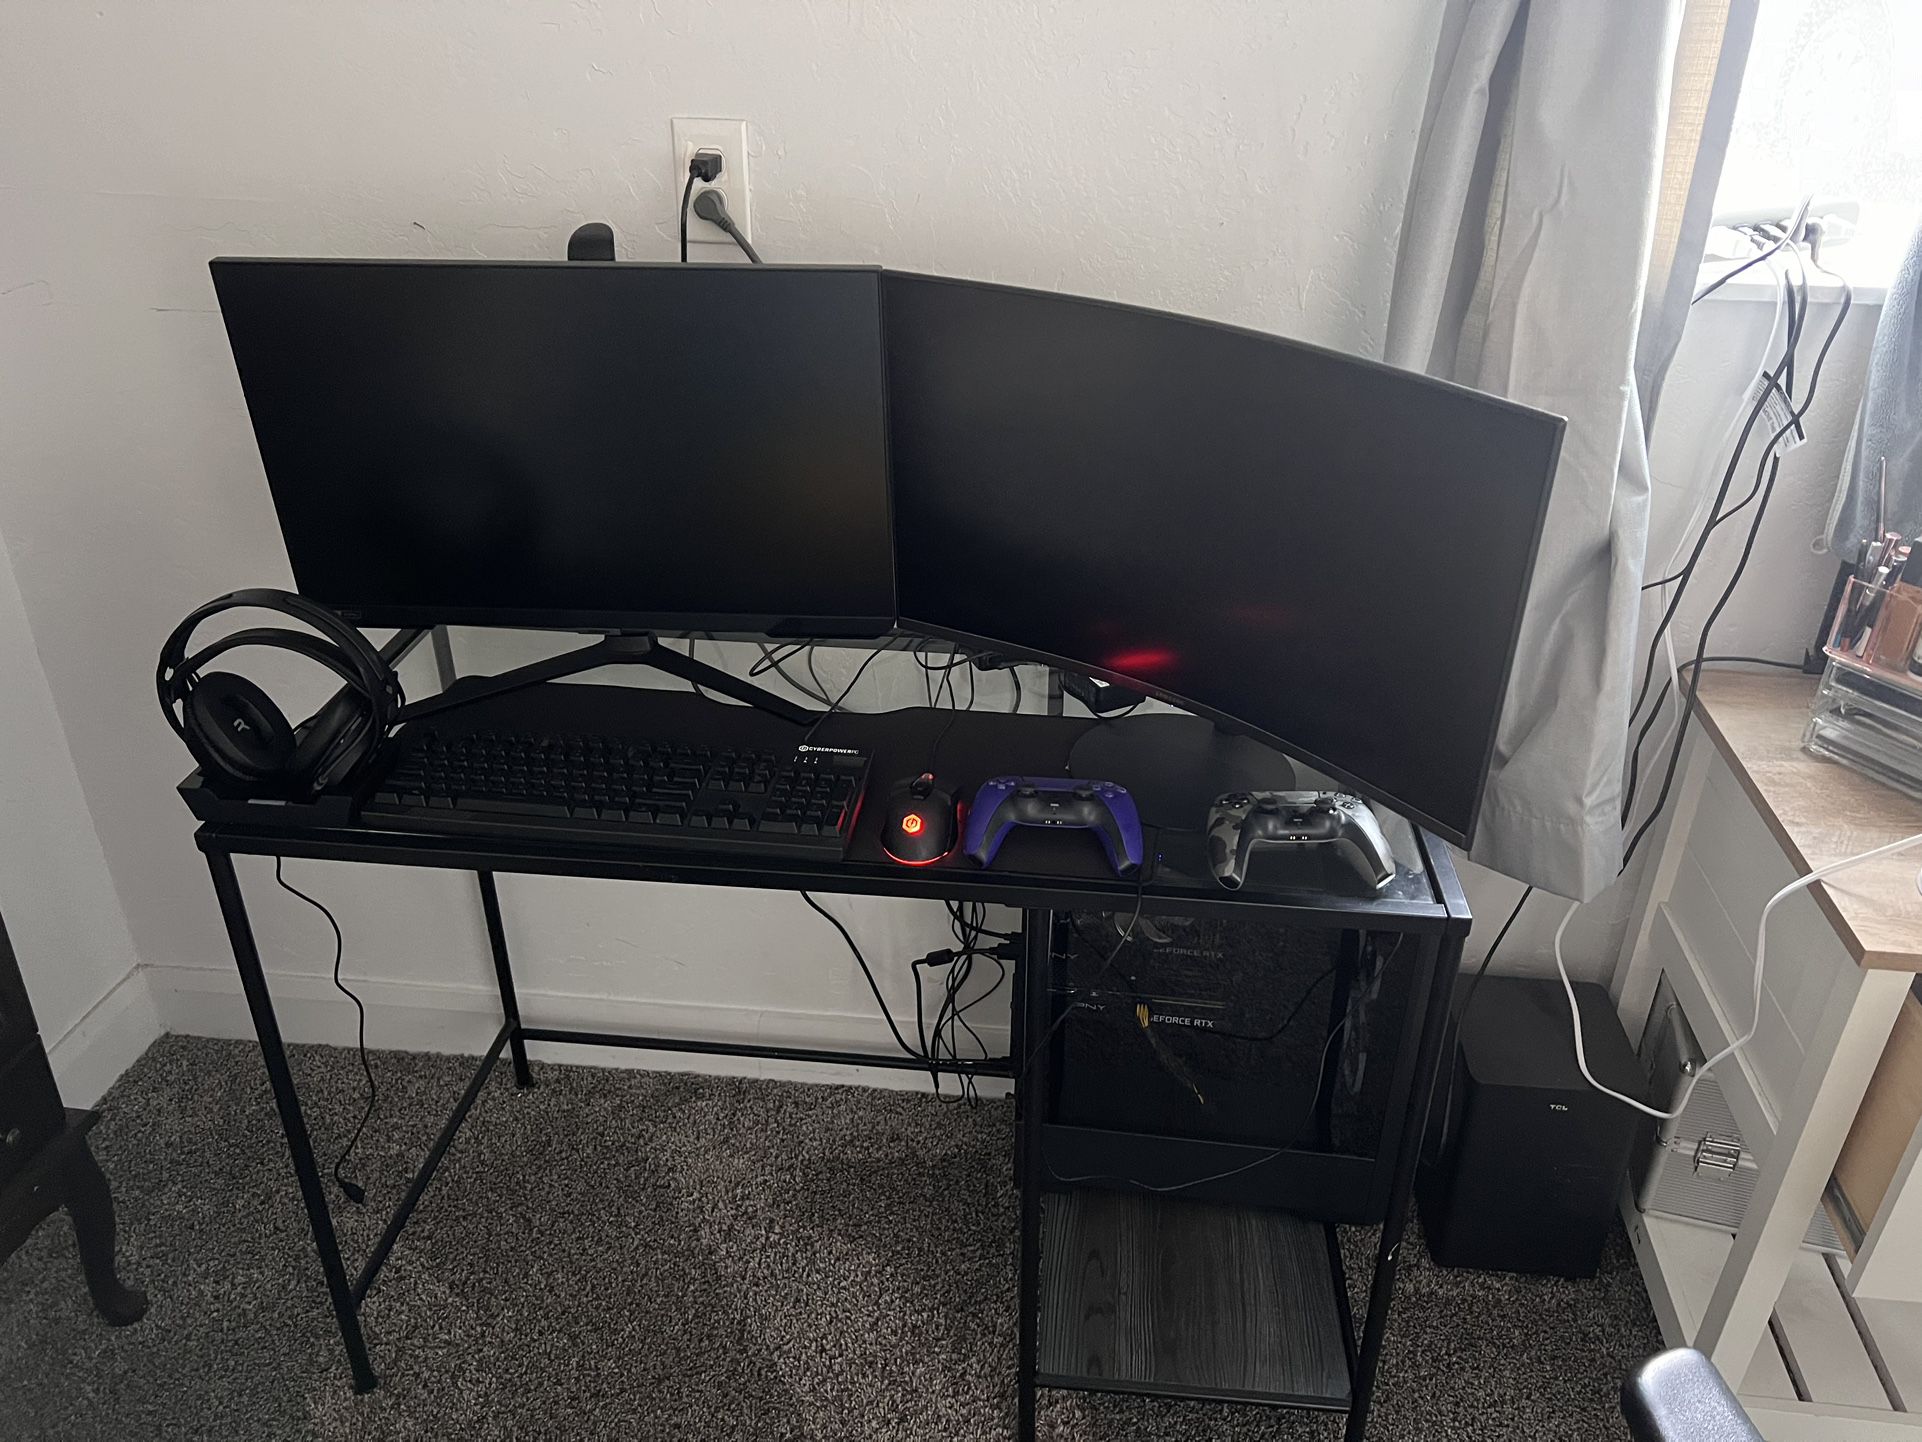 PC Setup For Gaming